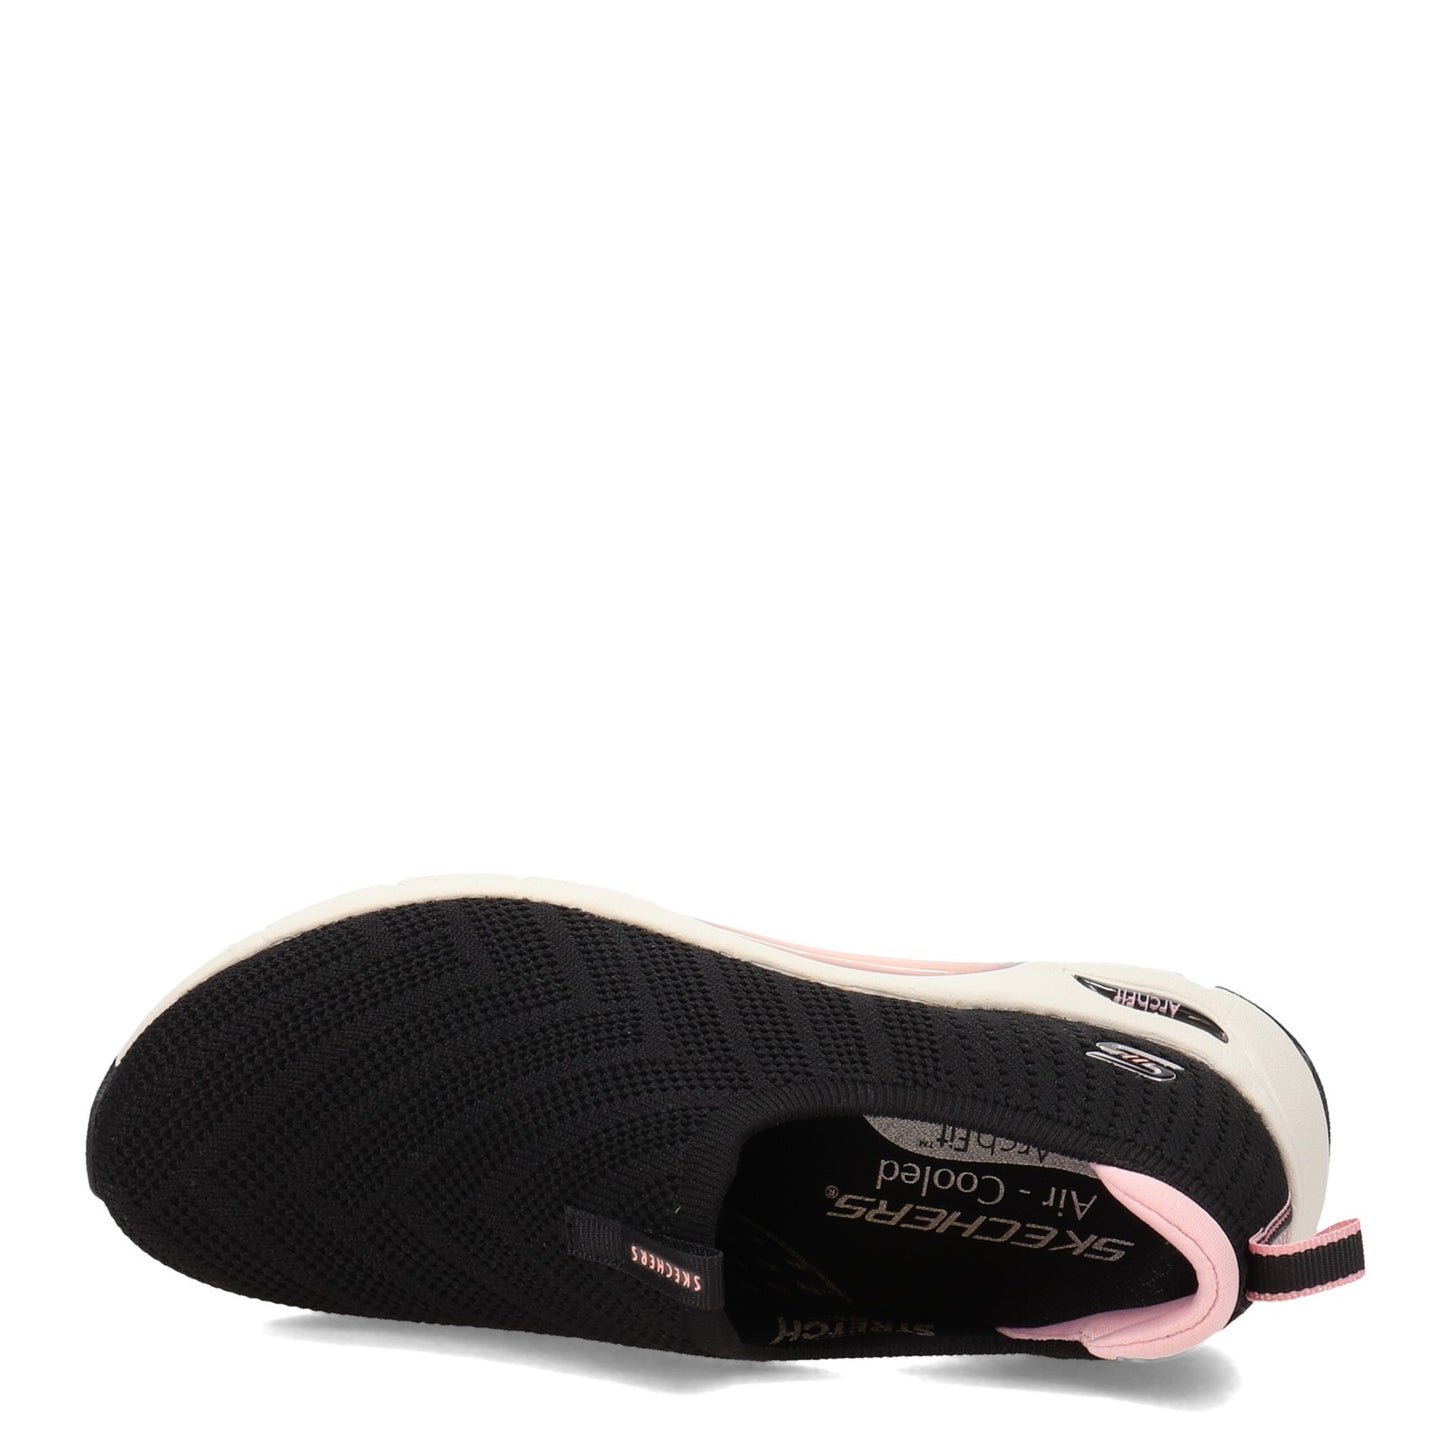 Peltz Shoes  Women's Skechers Skech-Air Arch Fit - Top Pick Walking Shoe BLACK 104251-BKLP